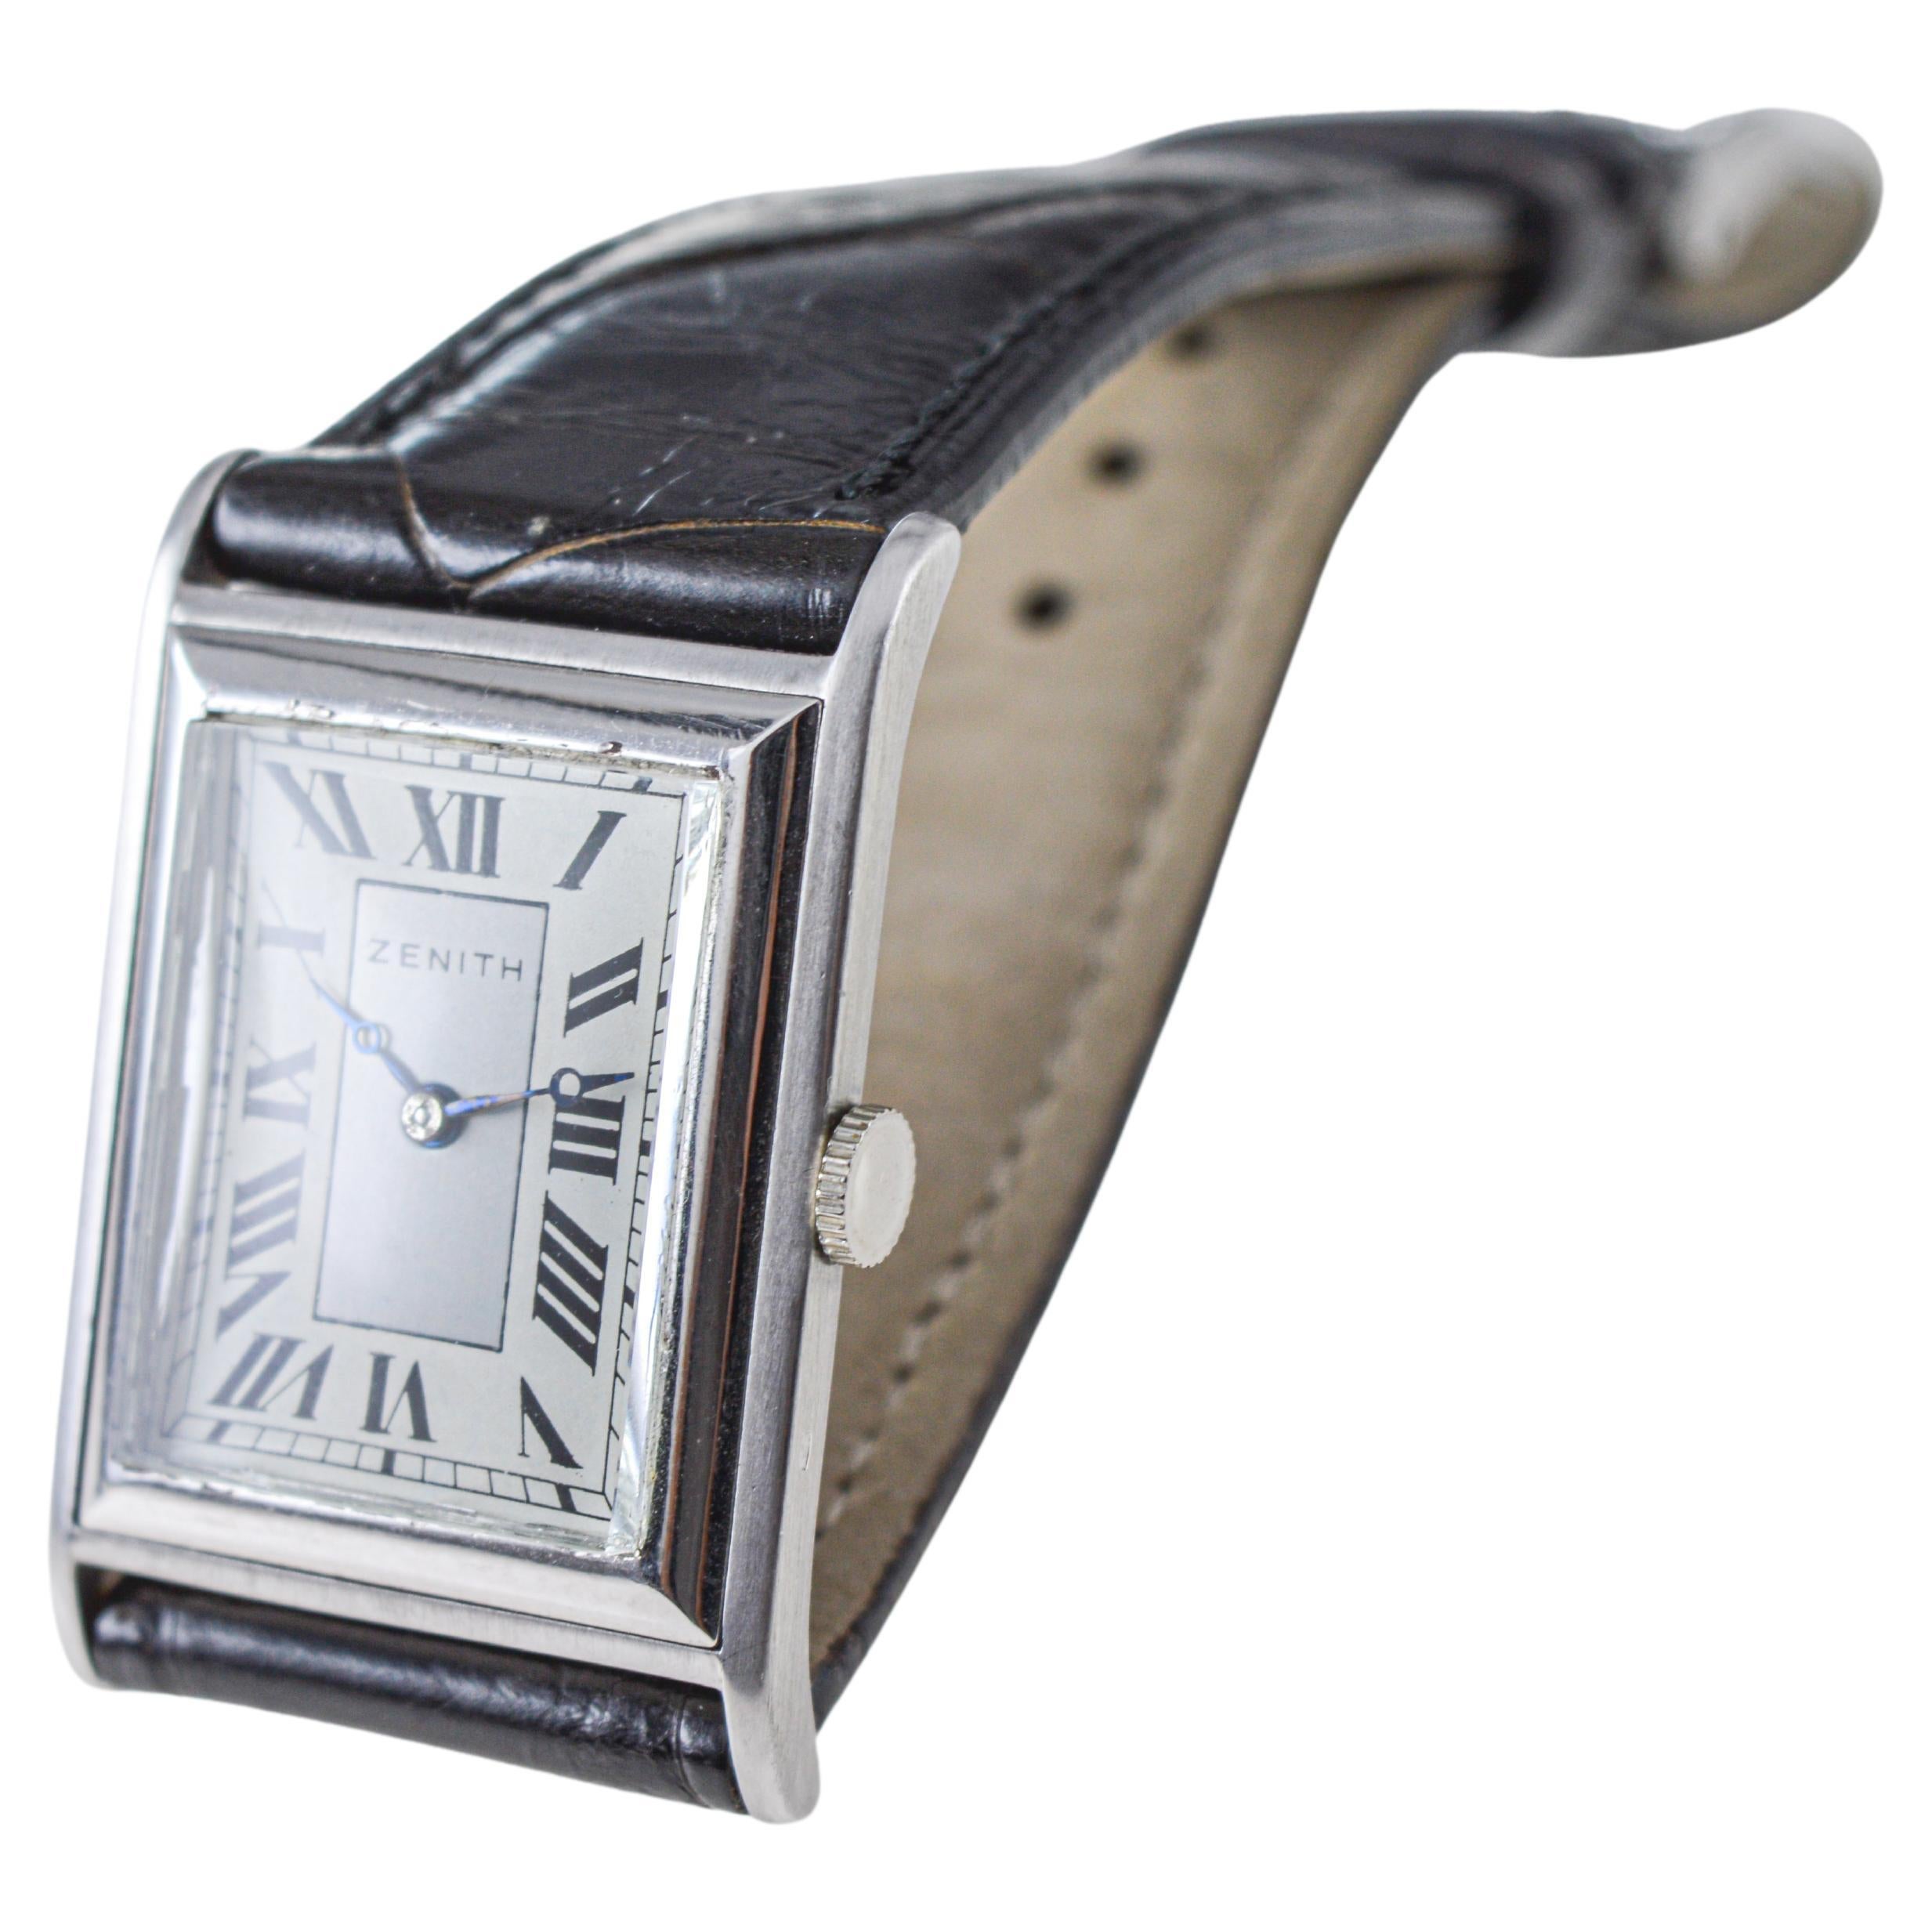 Zenith 18 Karat White Gold Art Deco Tank Style Watch, circa 1930s For Sale 4